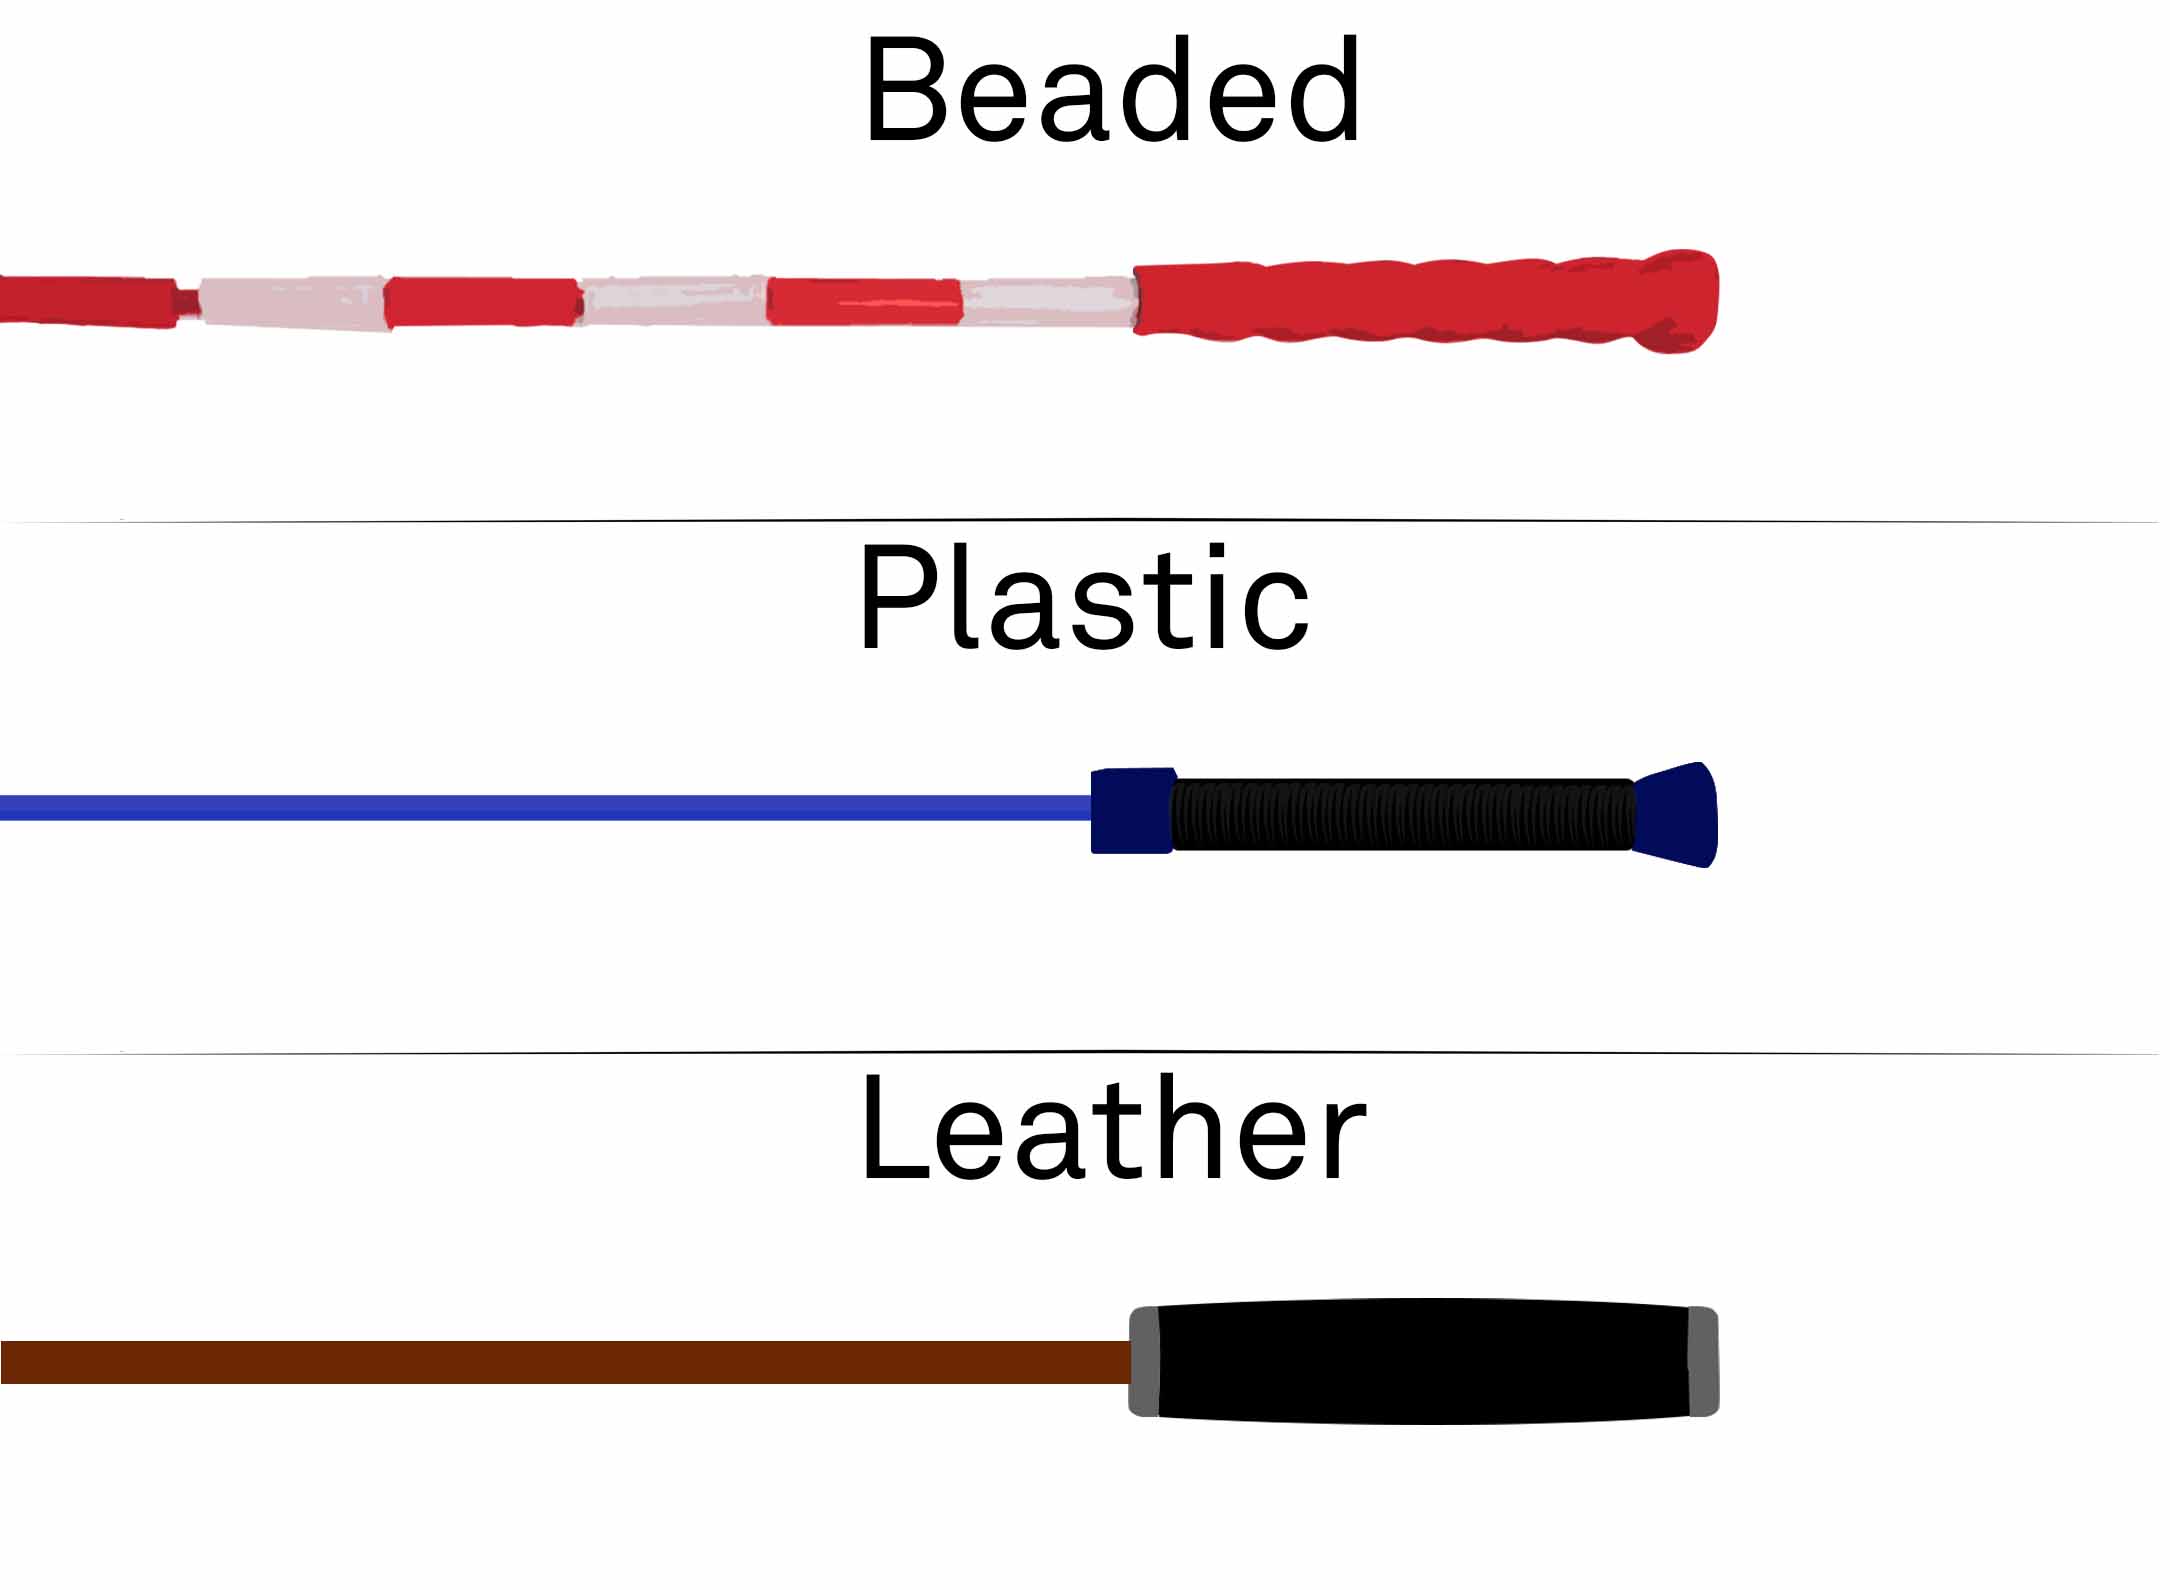 Beaded vs. Plastic vs. Leather